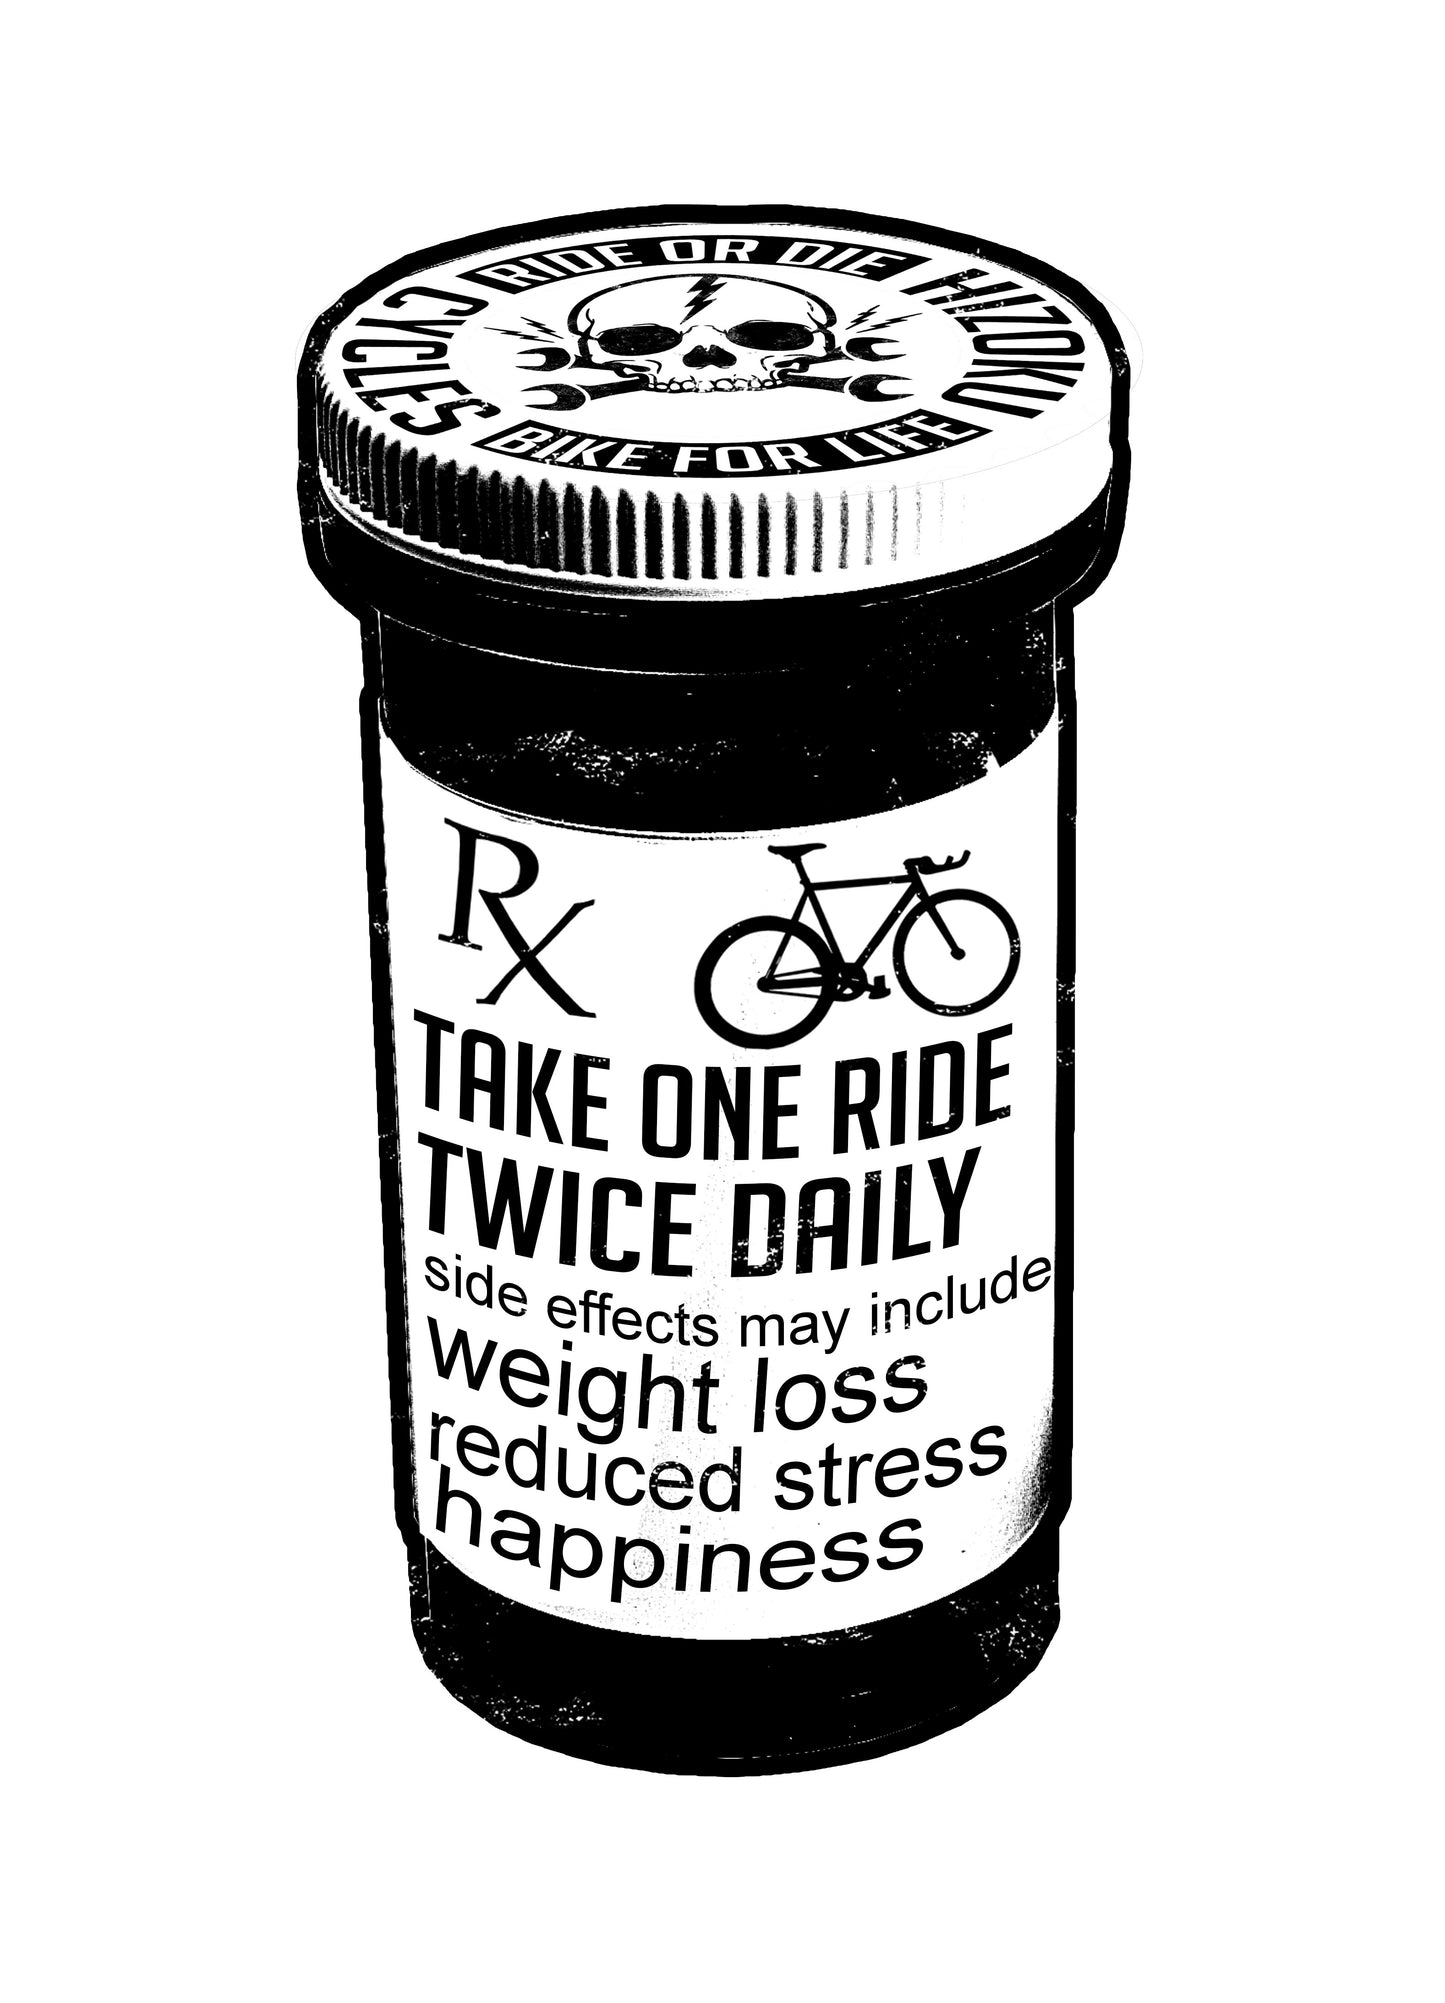 Bike Medicine 13 x 19 Poster Print